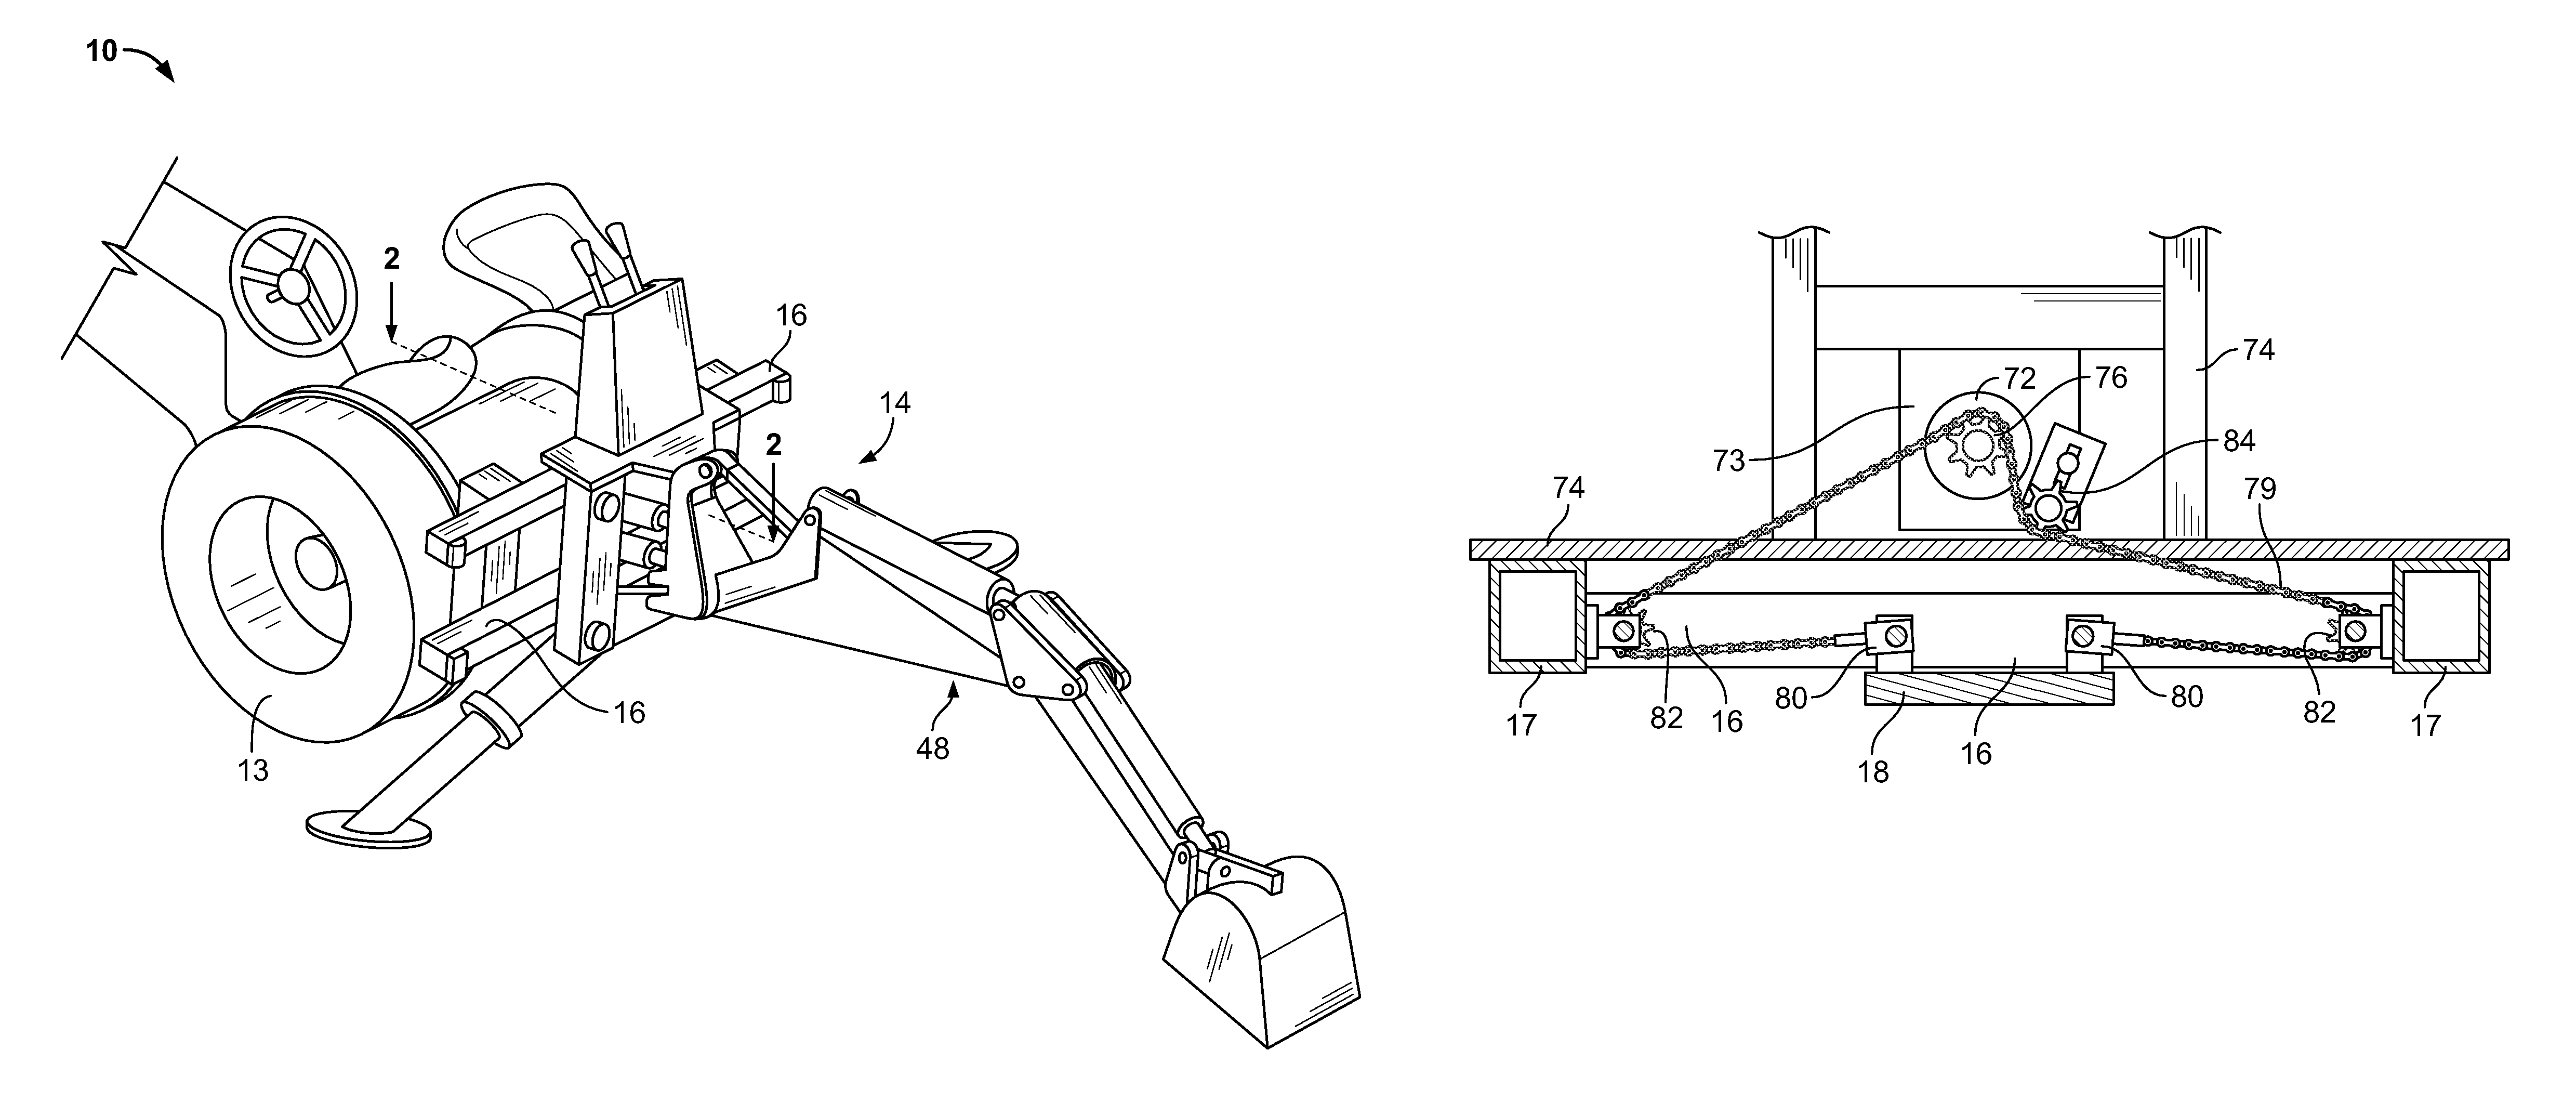 Hydraulic backhoe shift mechanism